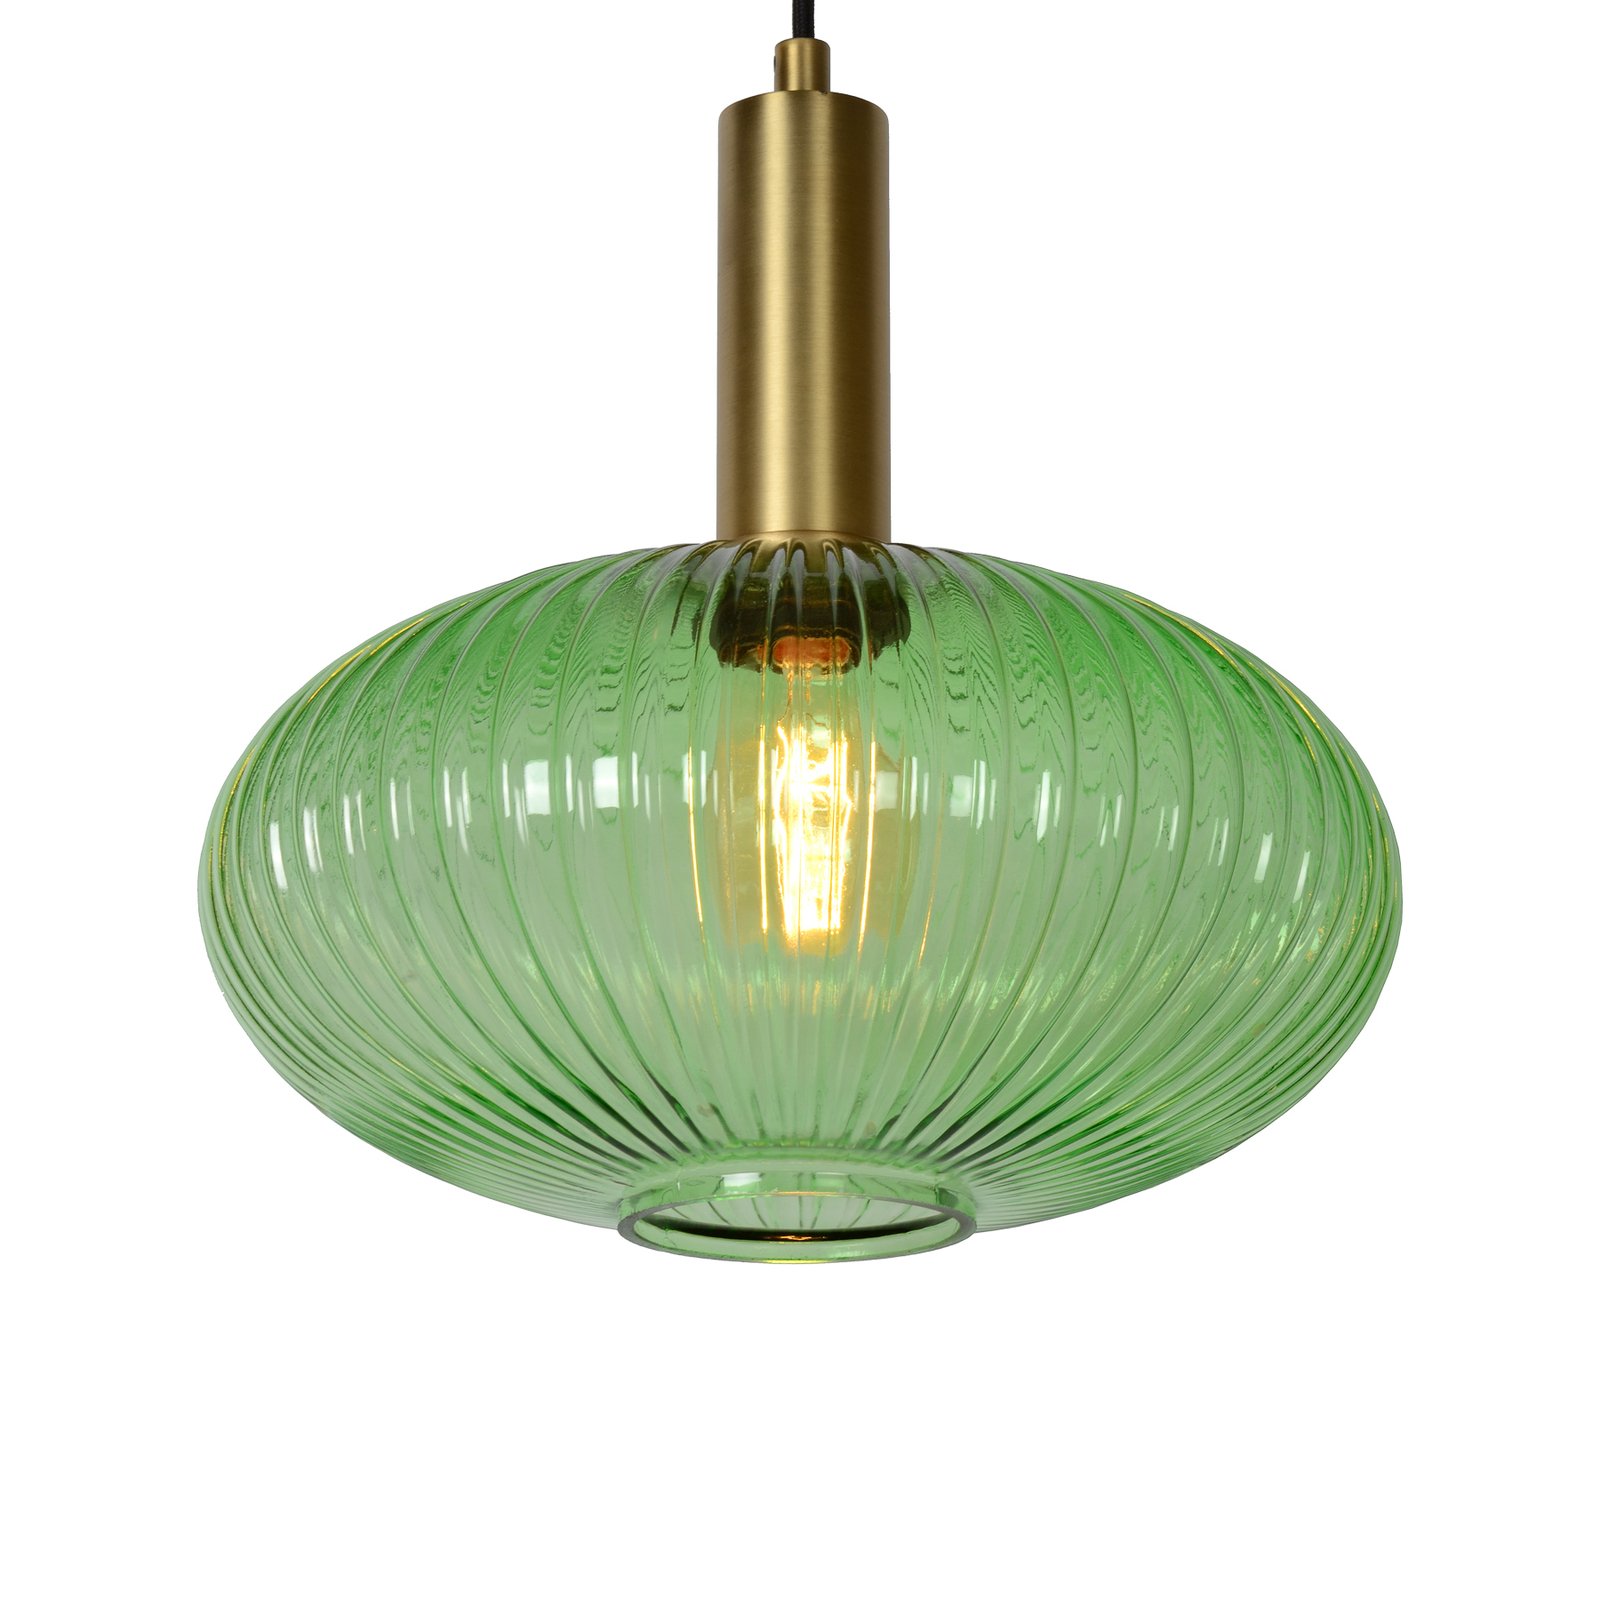 Maloto glass pendant light, Ø 30 cm, green